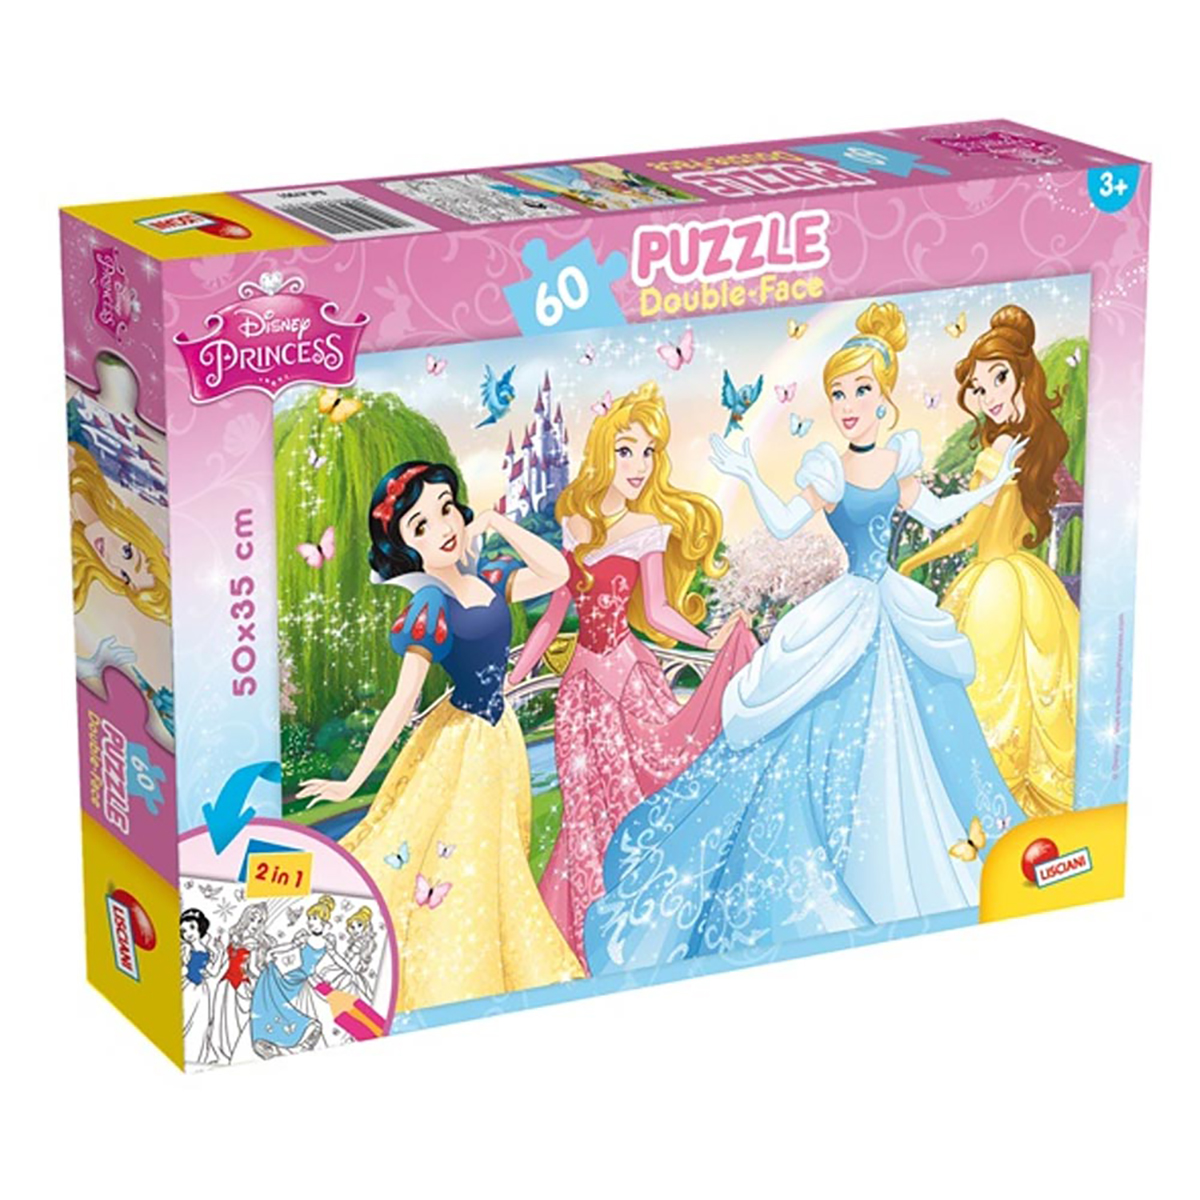 NOON Ausmal-Puzzle (50x35cm) Lisciani Disney Teile, von Puzzle Prinzessin 60